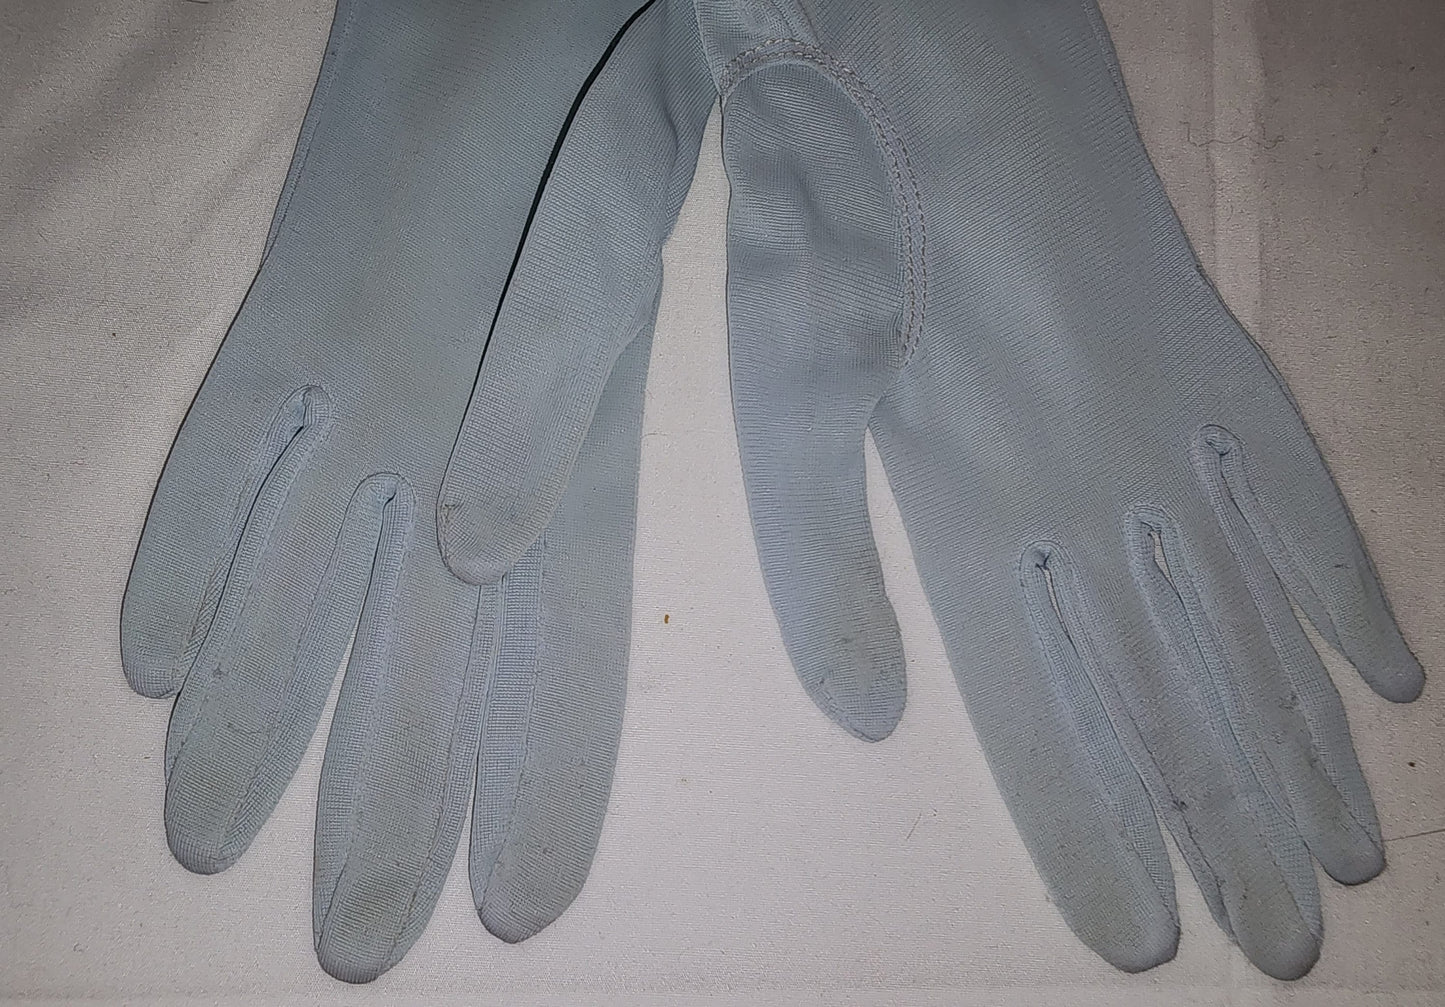 Vintage Blue Gloves 1950s Light Blue Nylon Gloves Lace Wrist Ruffles Mid Century